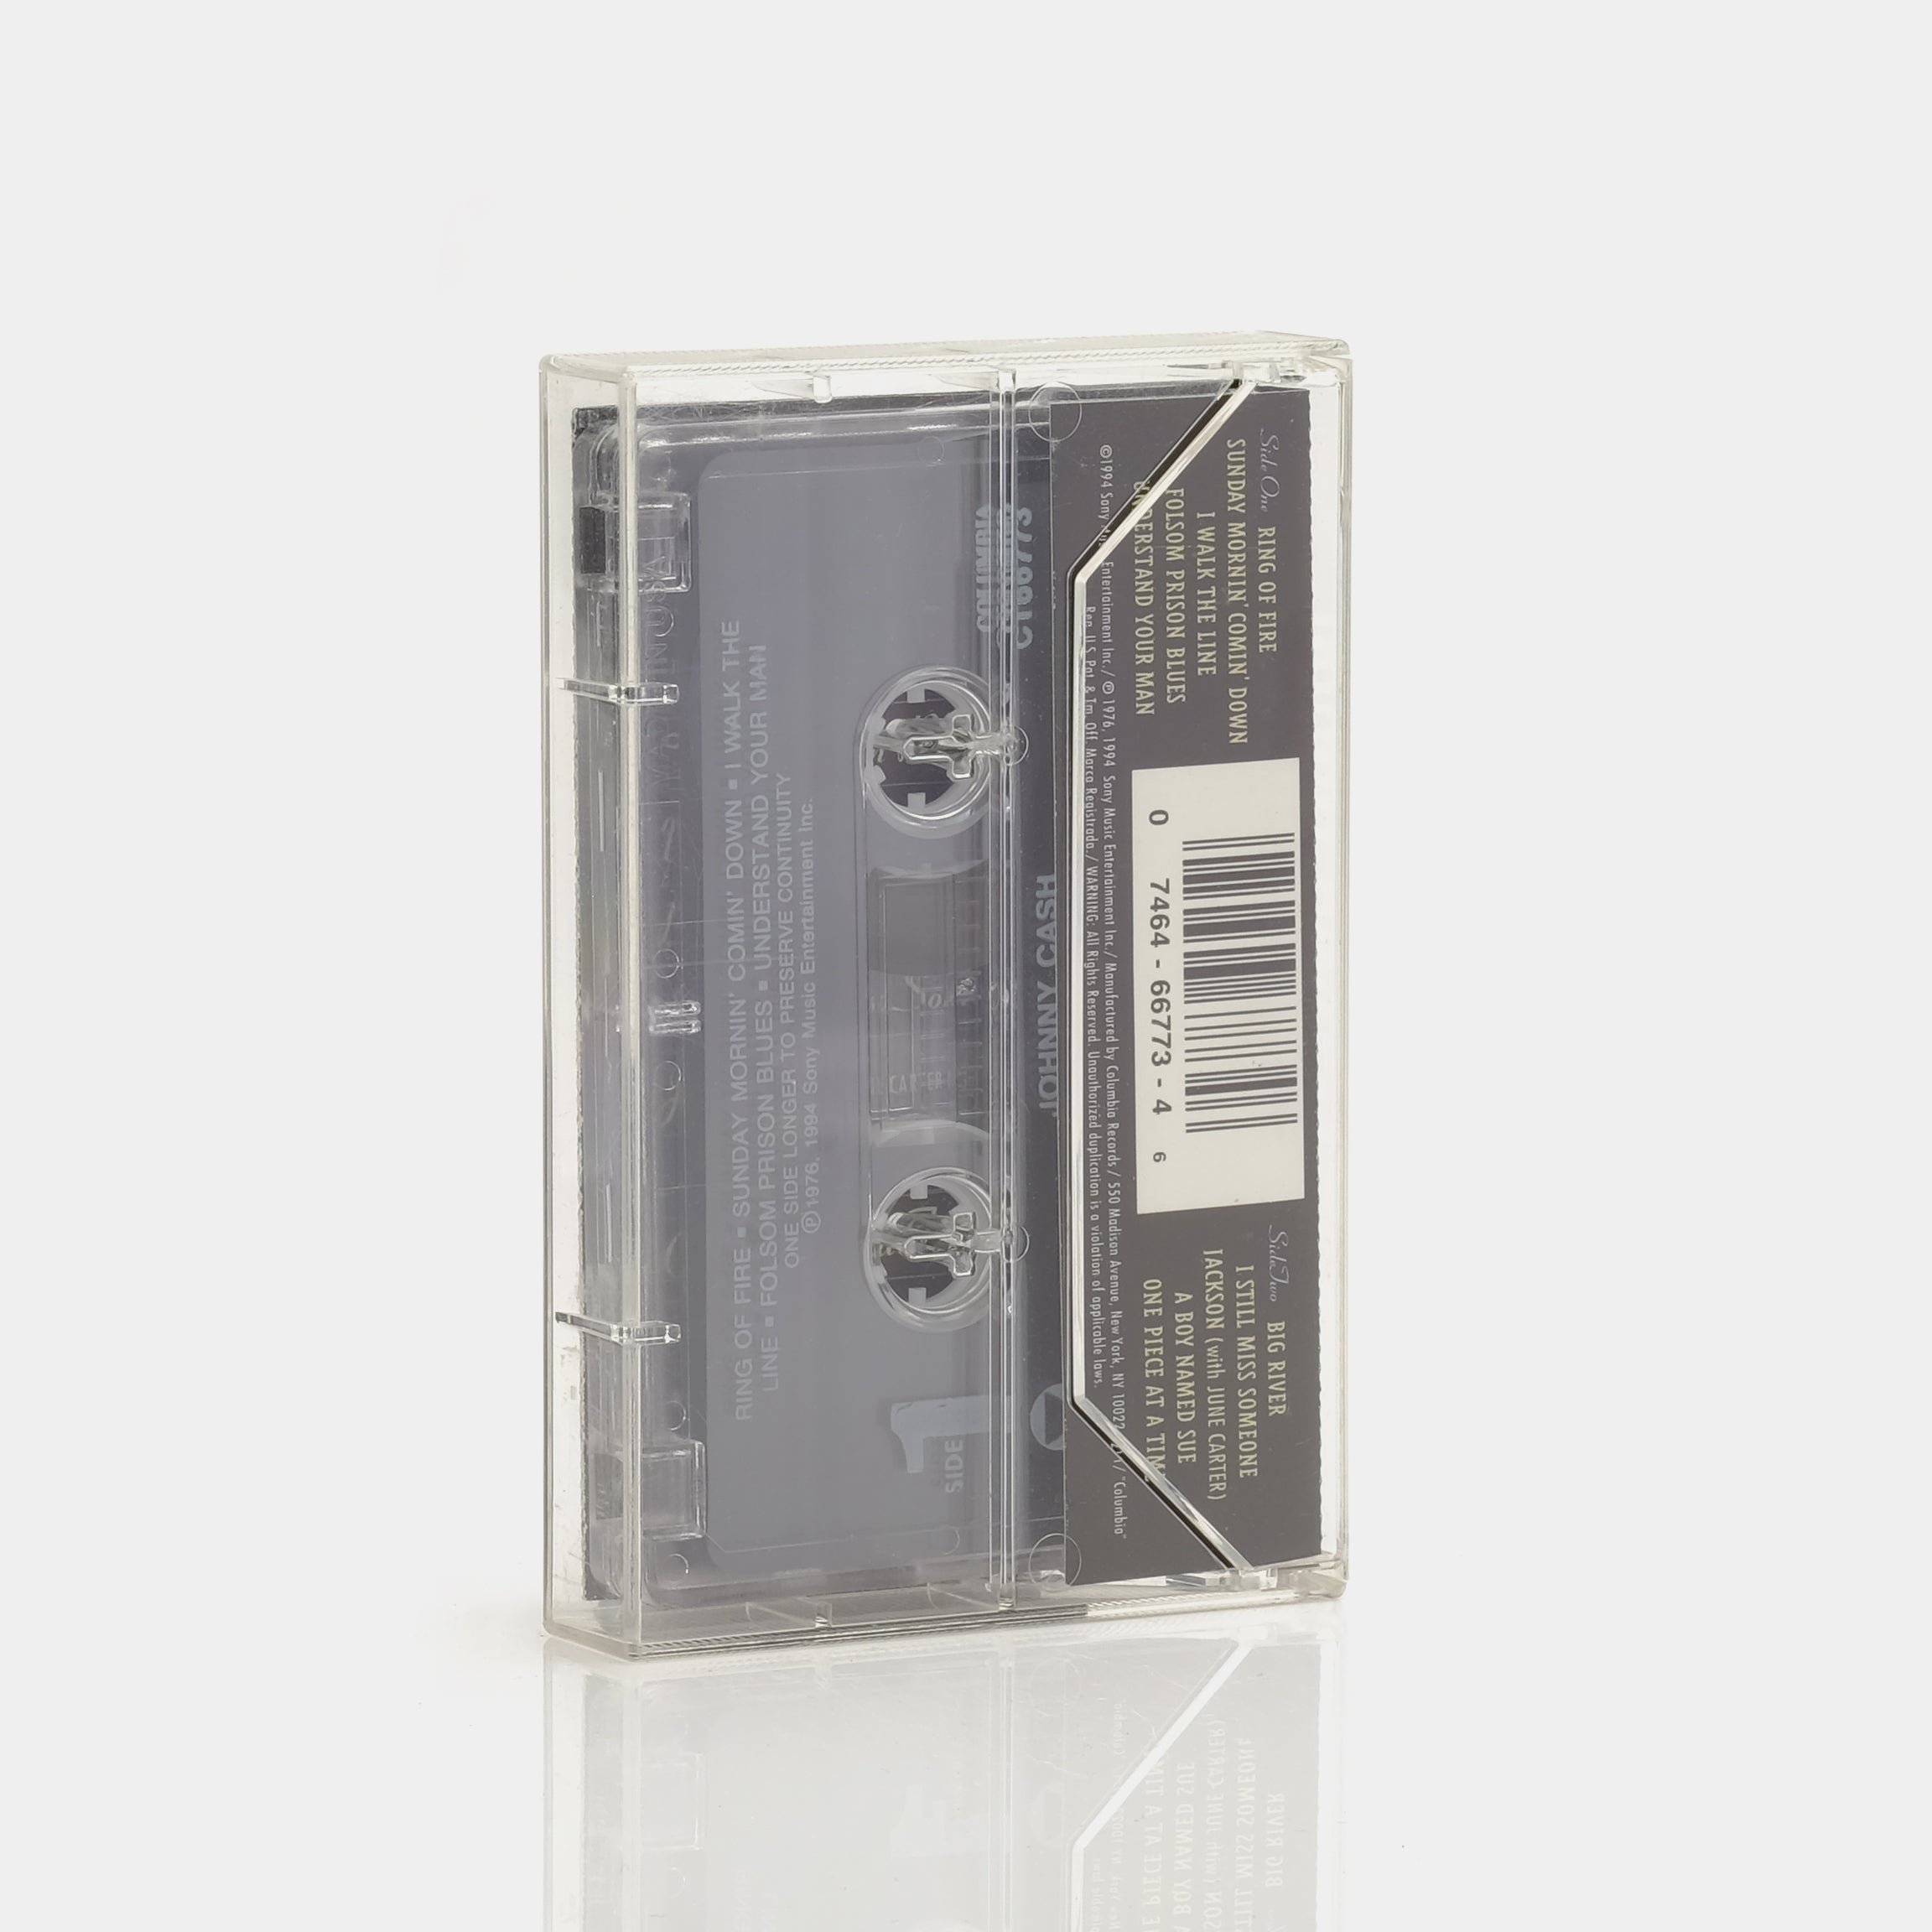 Johnny Cash - Super Hits Cassette Tape